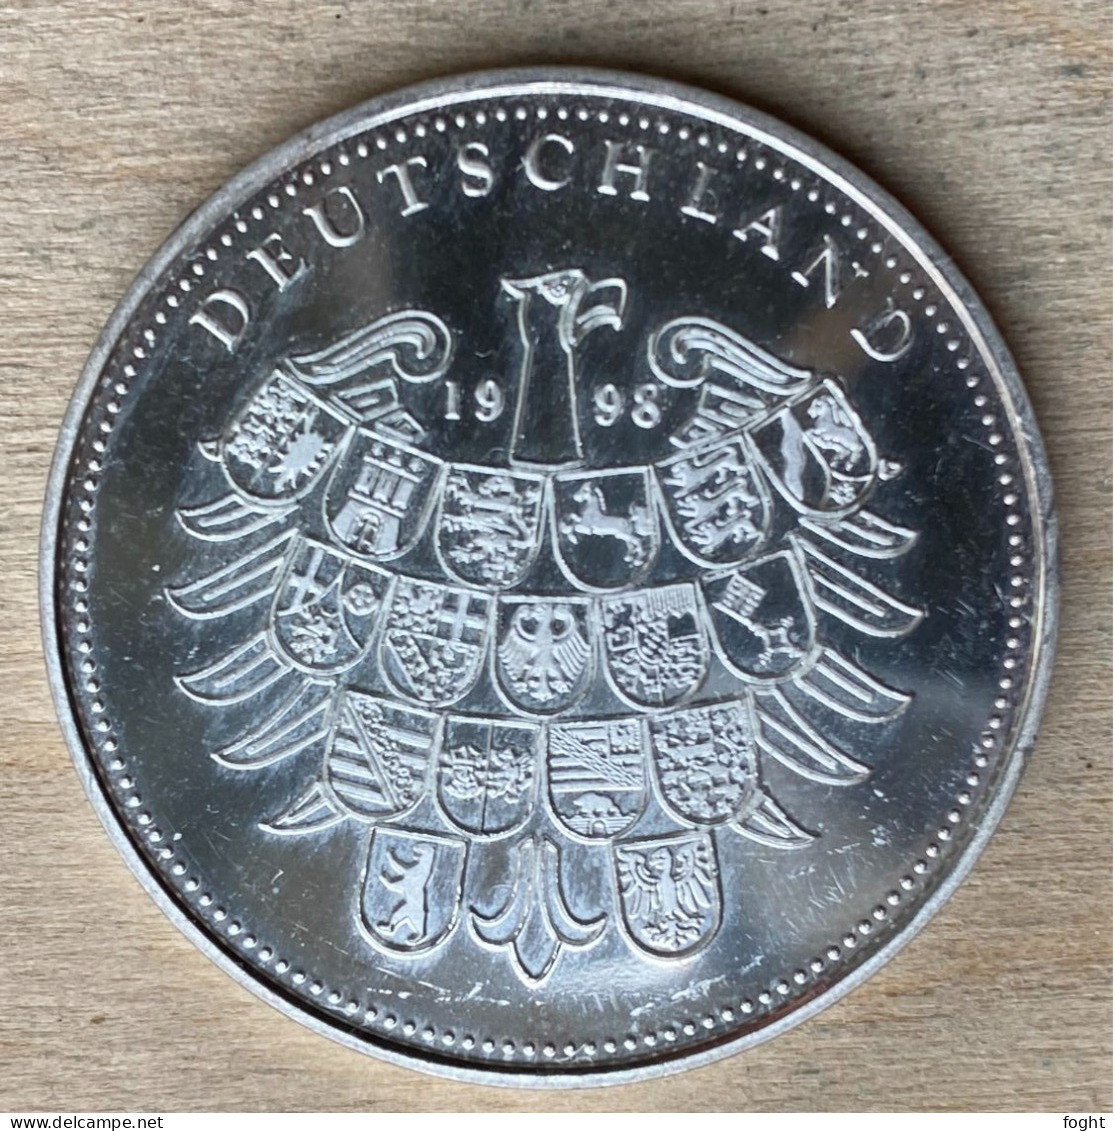 1998 Germany /BRD Medaille  50 Jahre Deutsche Währung .500 Silber,PP,7225 - Professionali/Di Società